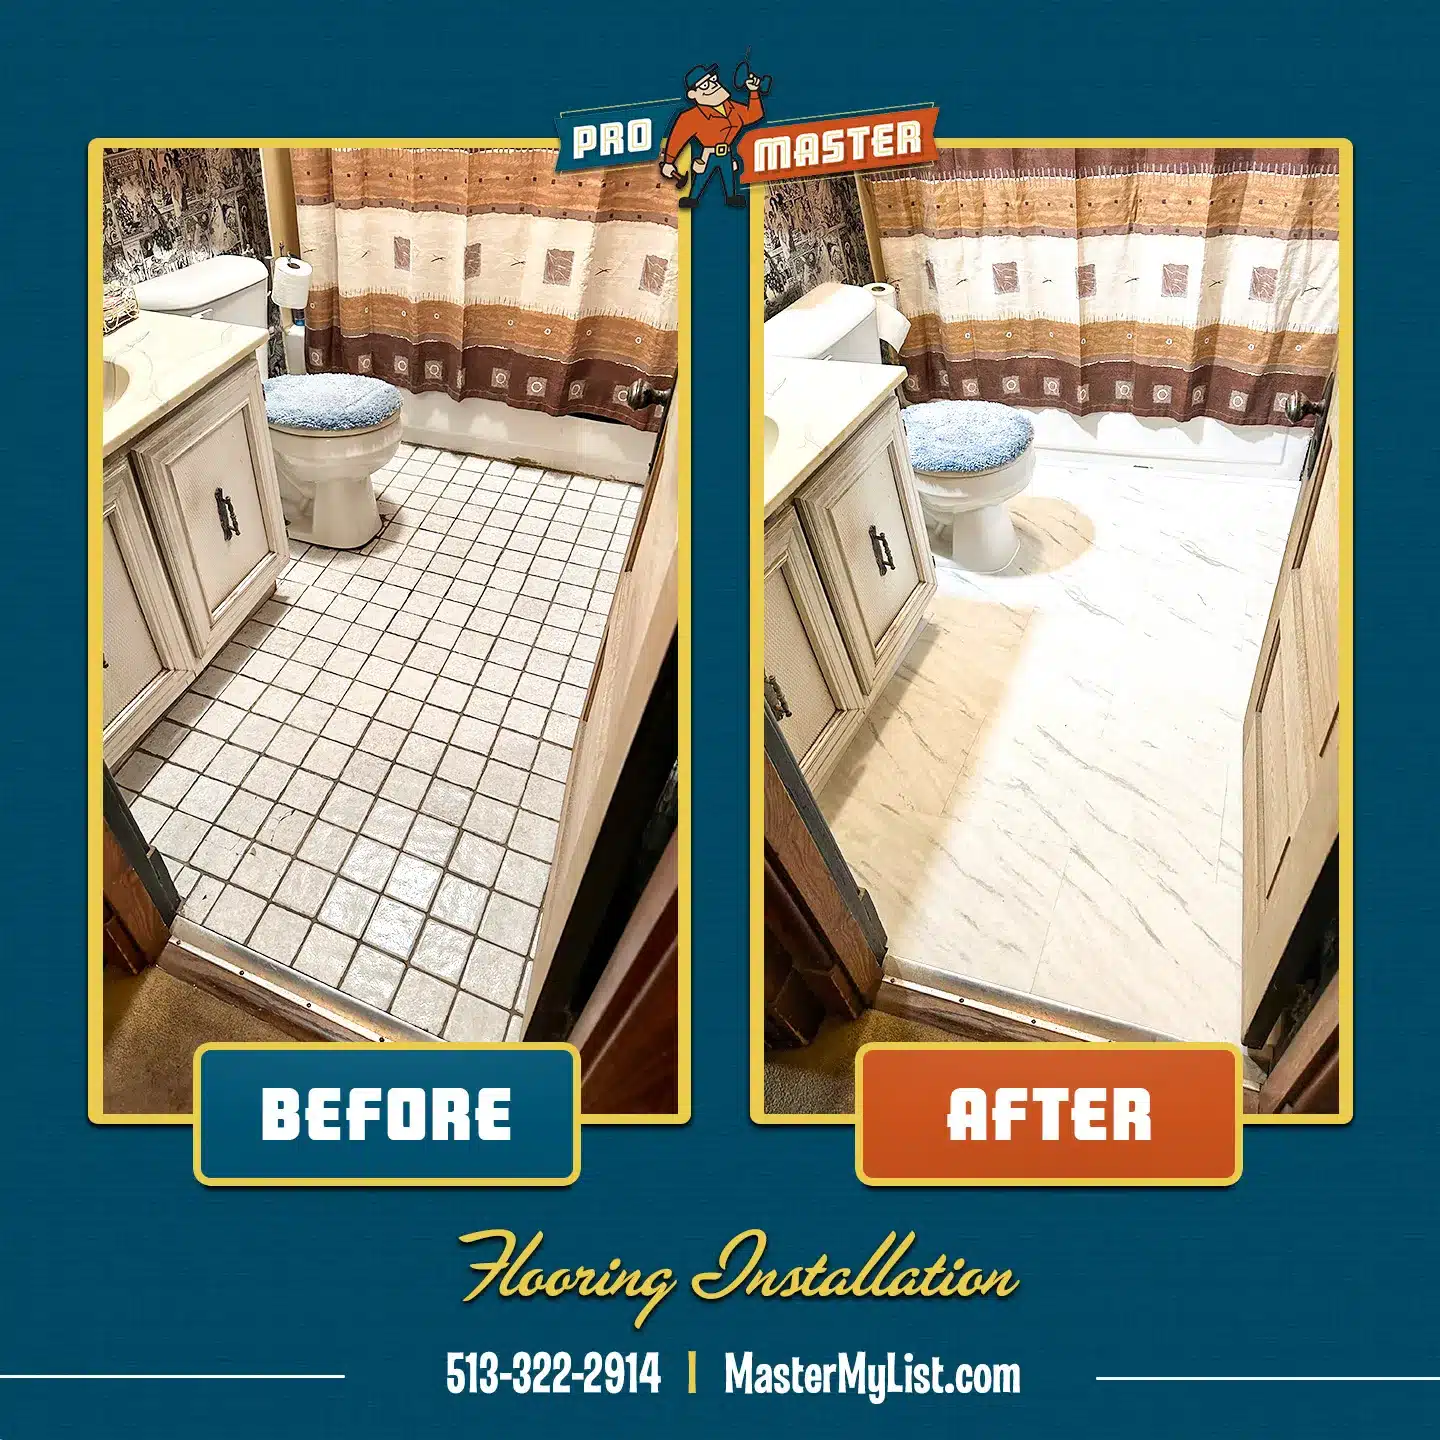 Bathroom flooring installation completed by a ProMaster craftsman in Cincinnati, OH.